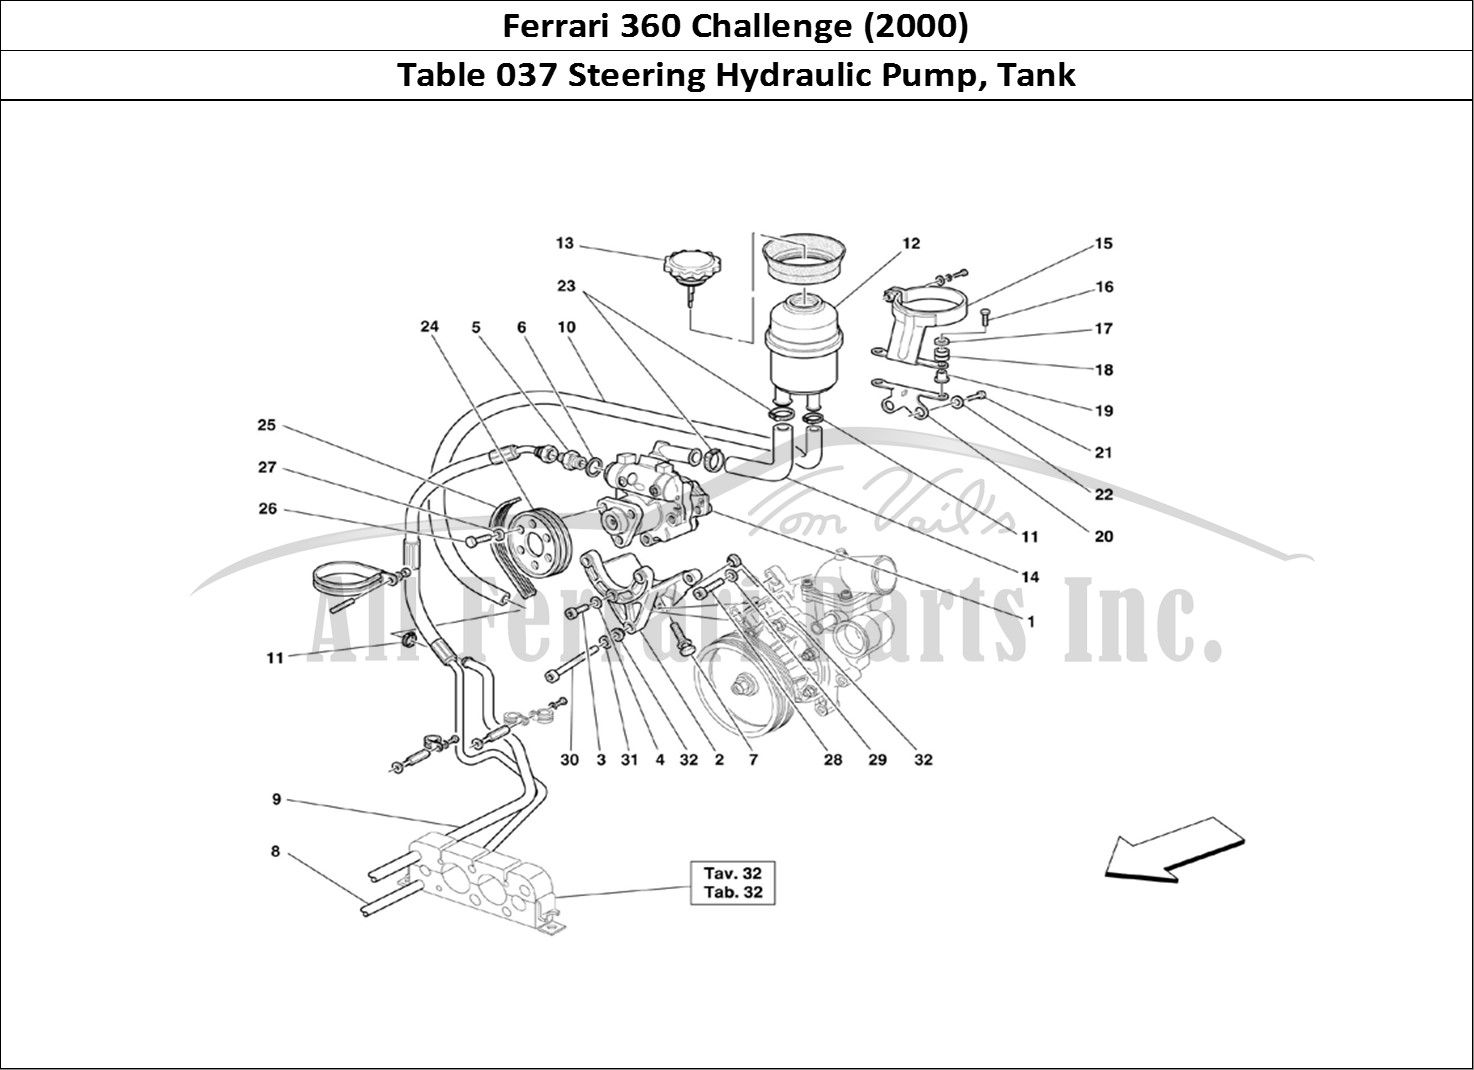 Ferrari Parts Ferrari 360 Challenge (2000) Page 037 Hydraulic Steering Pump a